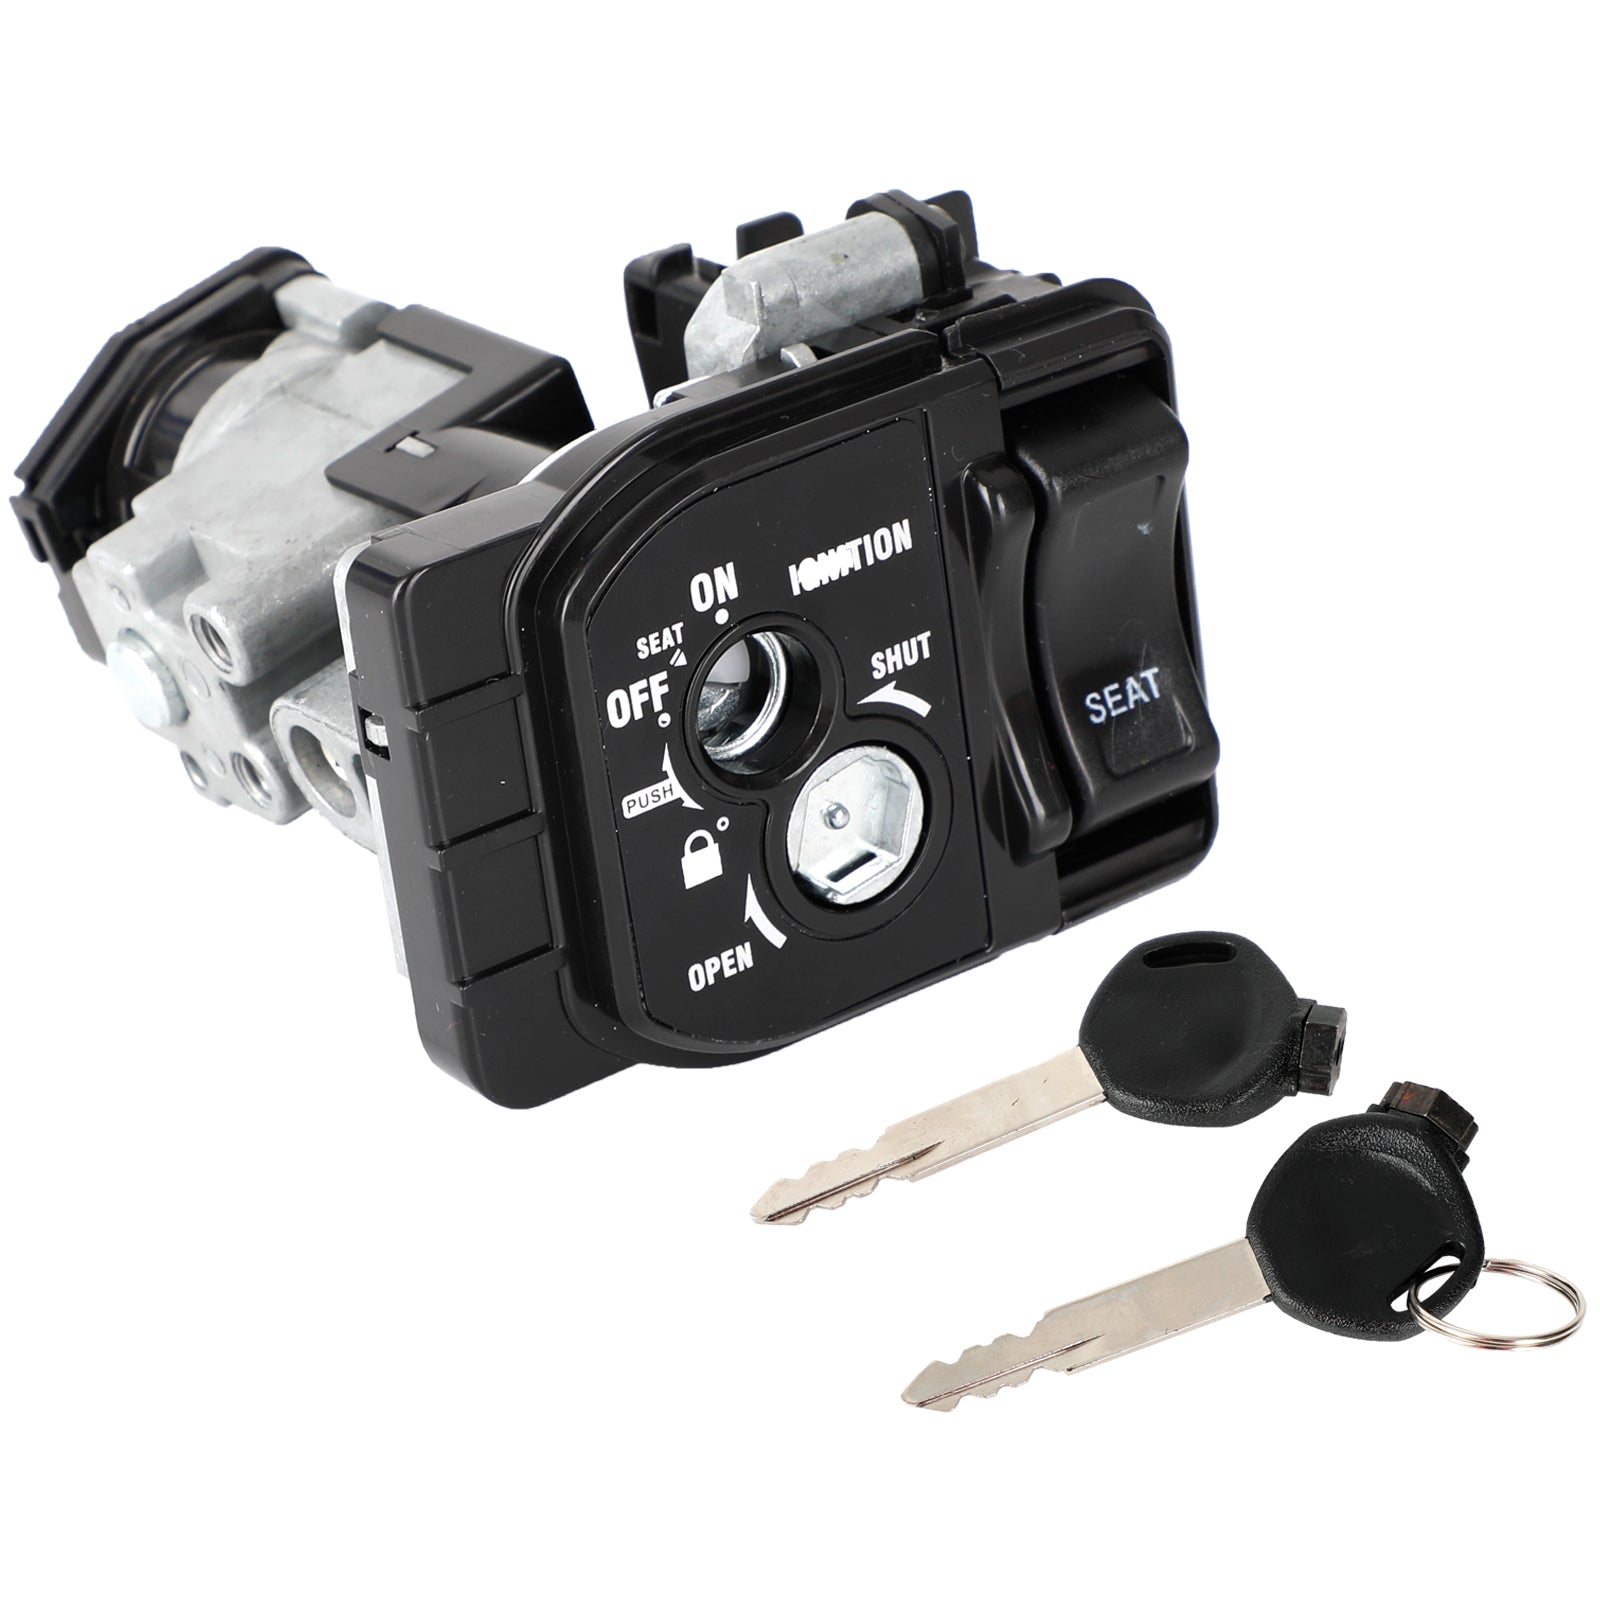 2015-2016 Honda Vario 150 Fi Lock Set Key Ignition Switch Seat Lock